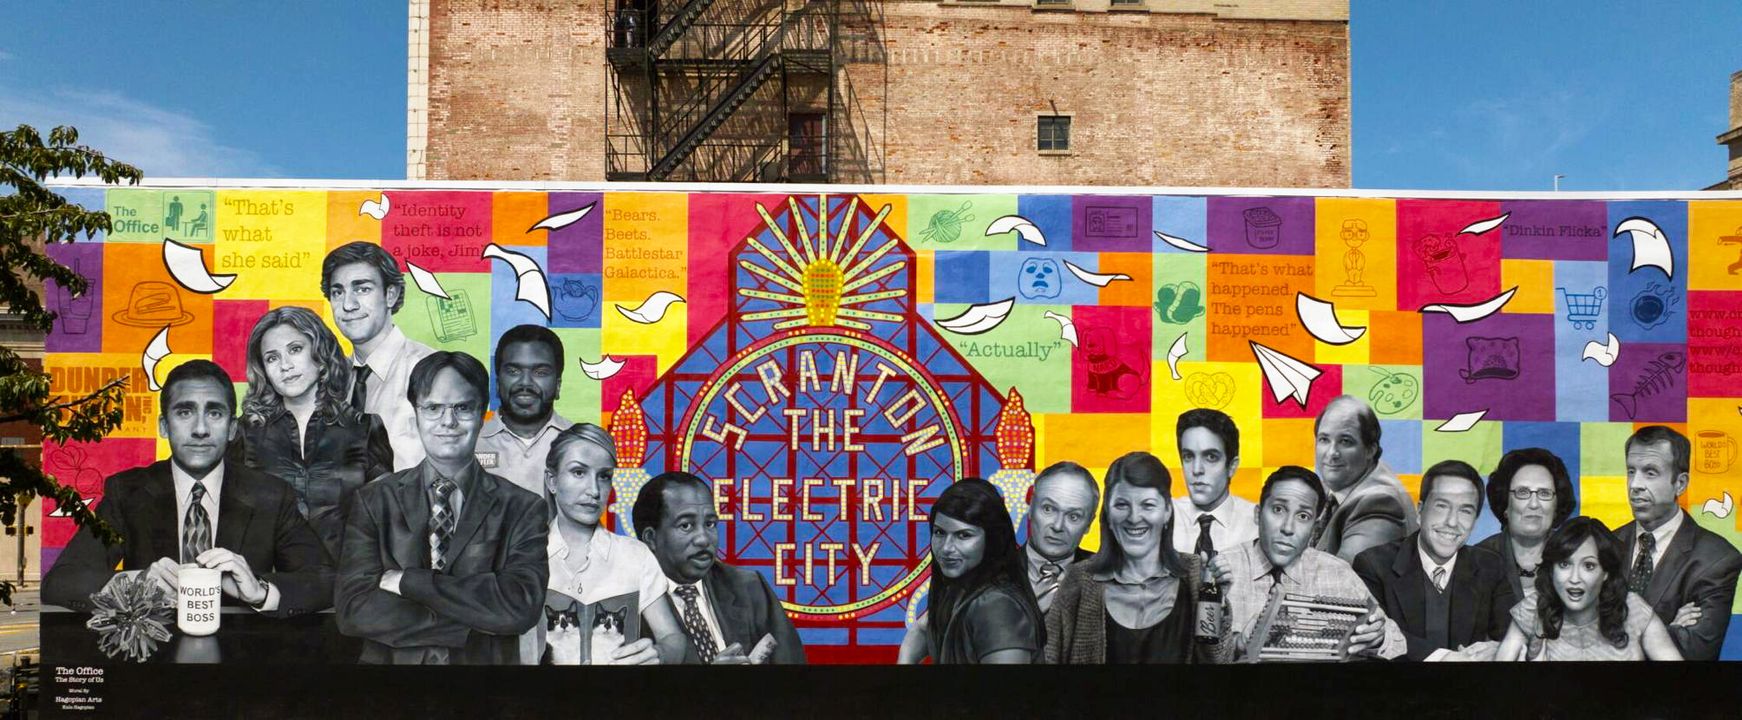 The Office' mural debuts in Scranton, thanks to Philadelphia artists